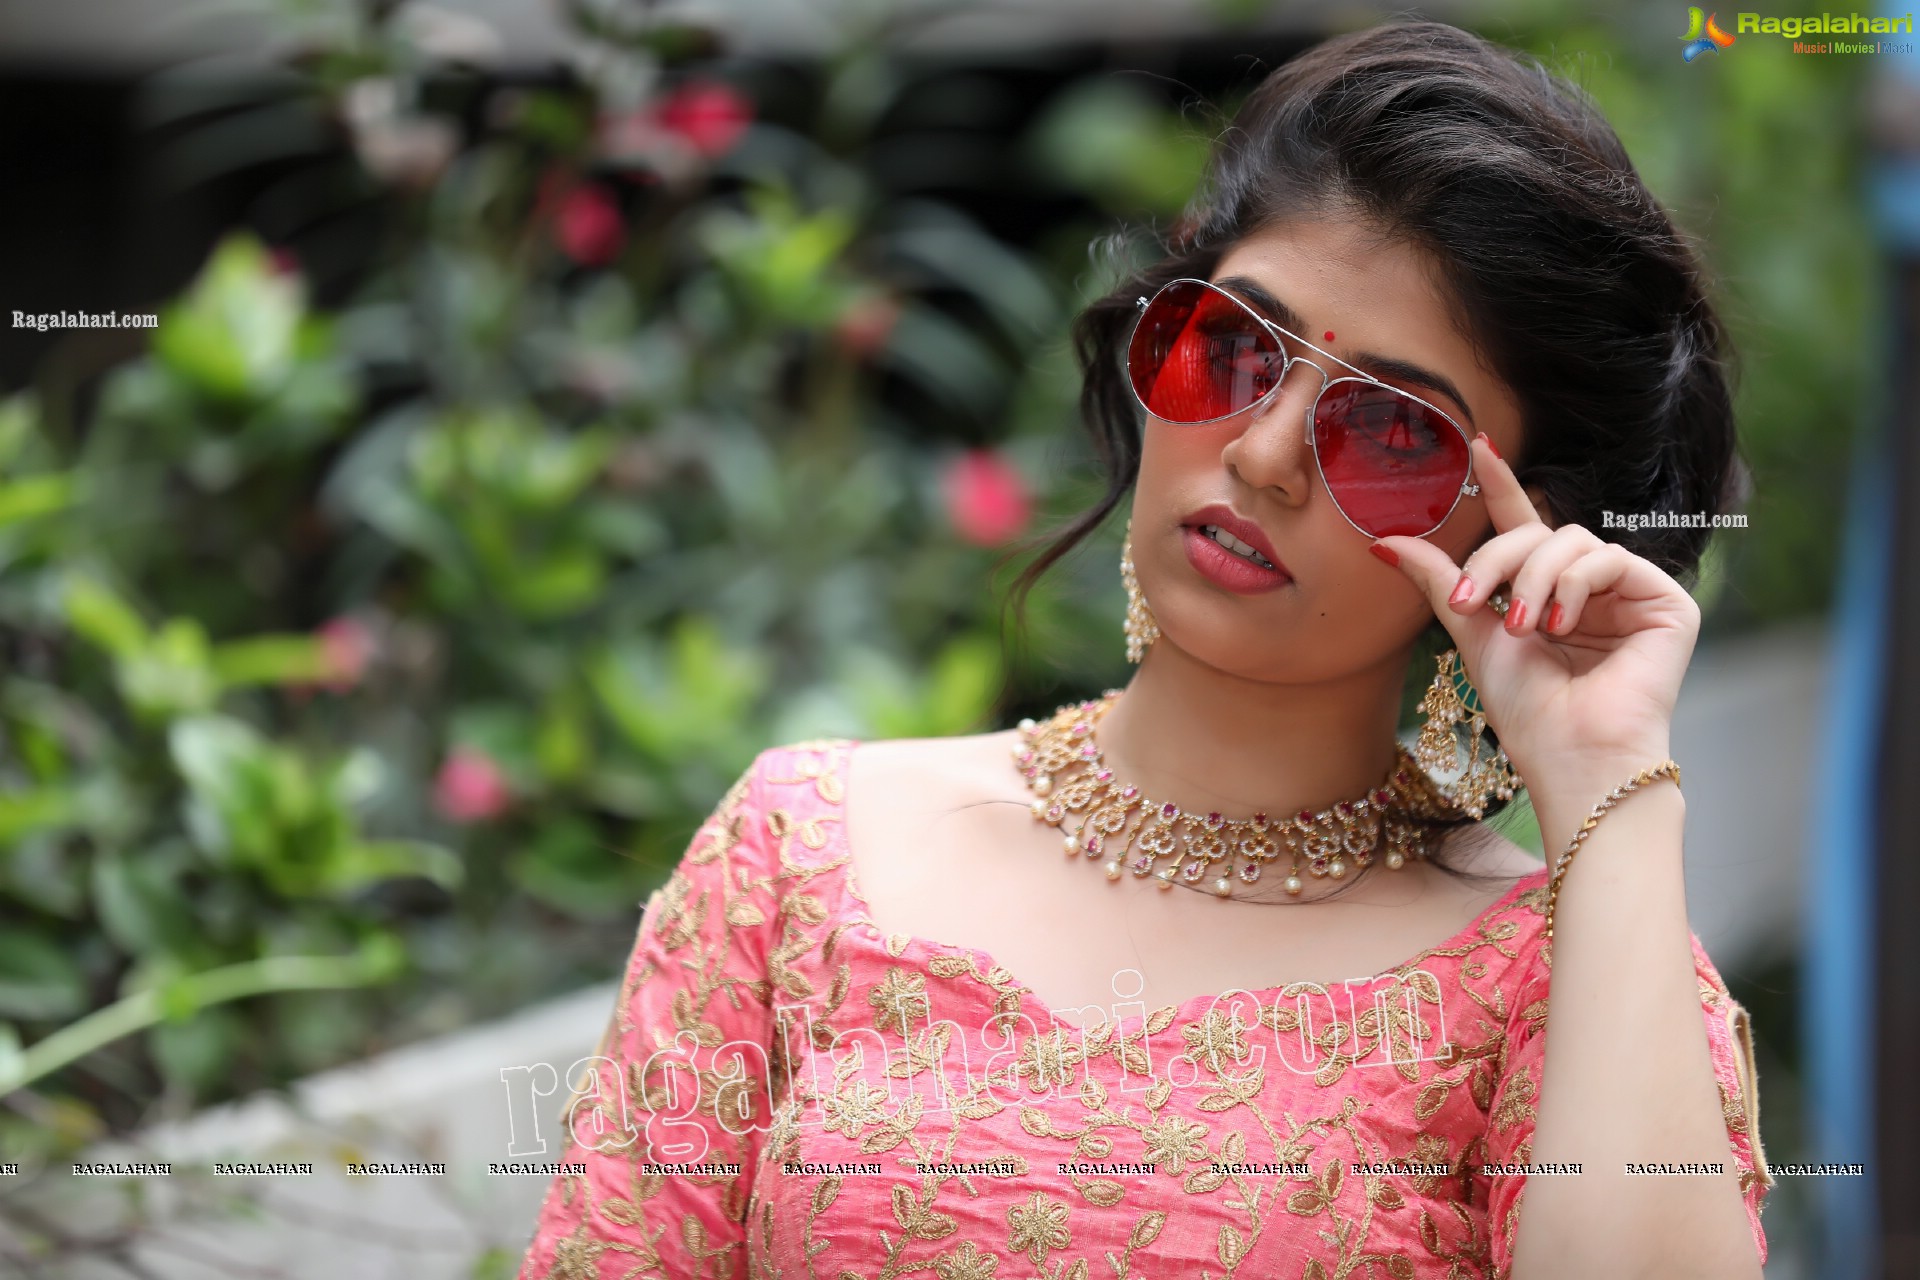 Viswa Sri Bandhavi in Blush Pink and Champagne Embellished Lehenga Exclusive Photo Shoot